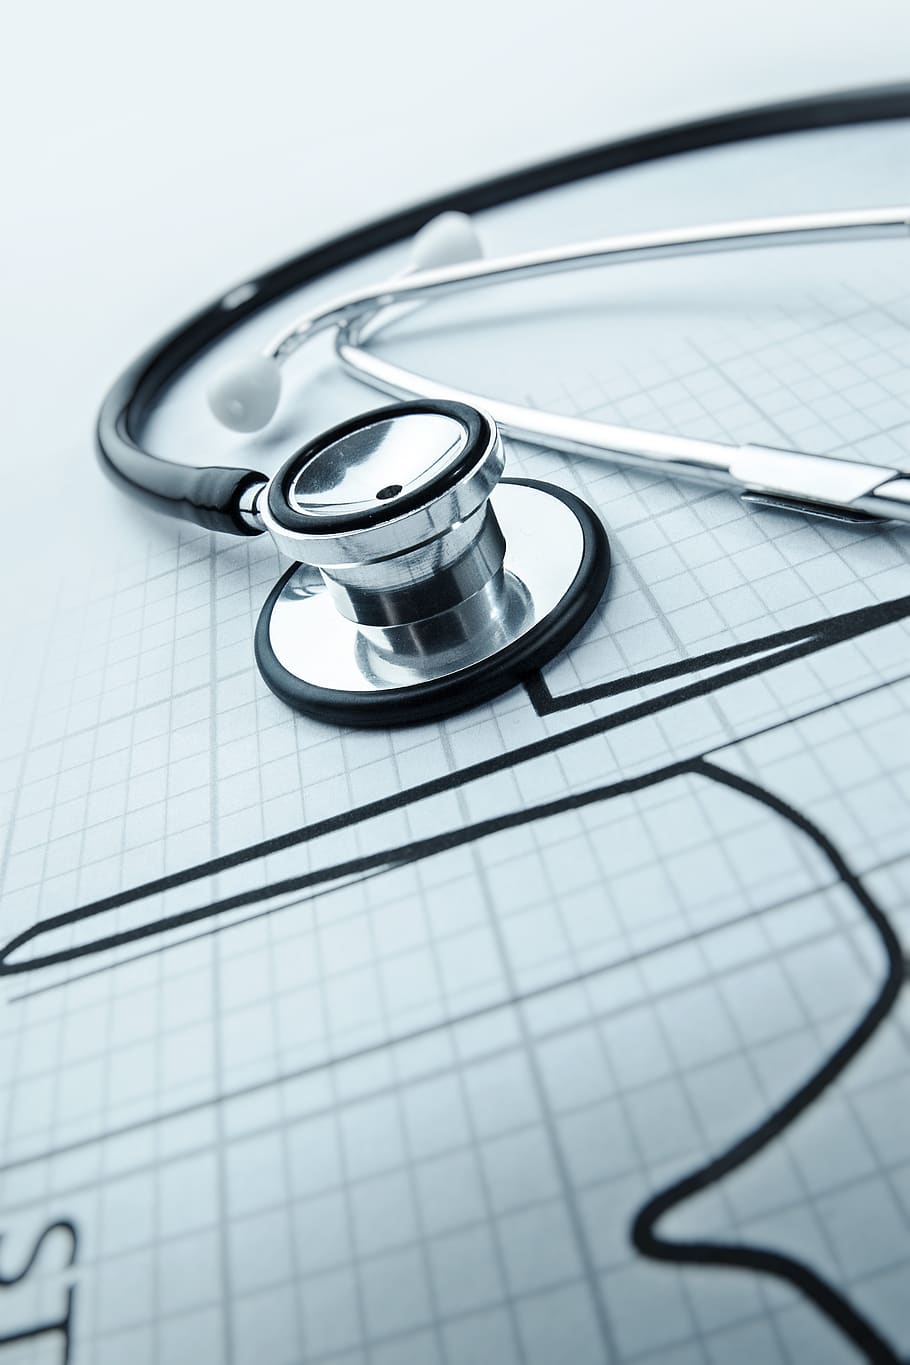 HD wallpaper: health, stethoscope, heart, hospital, medical